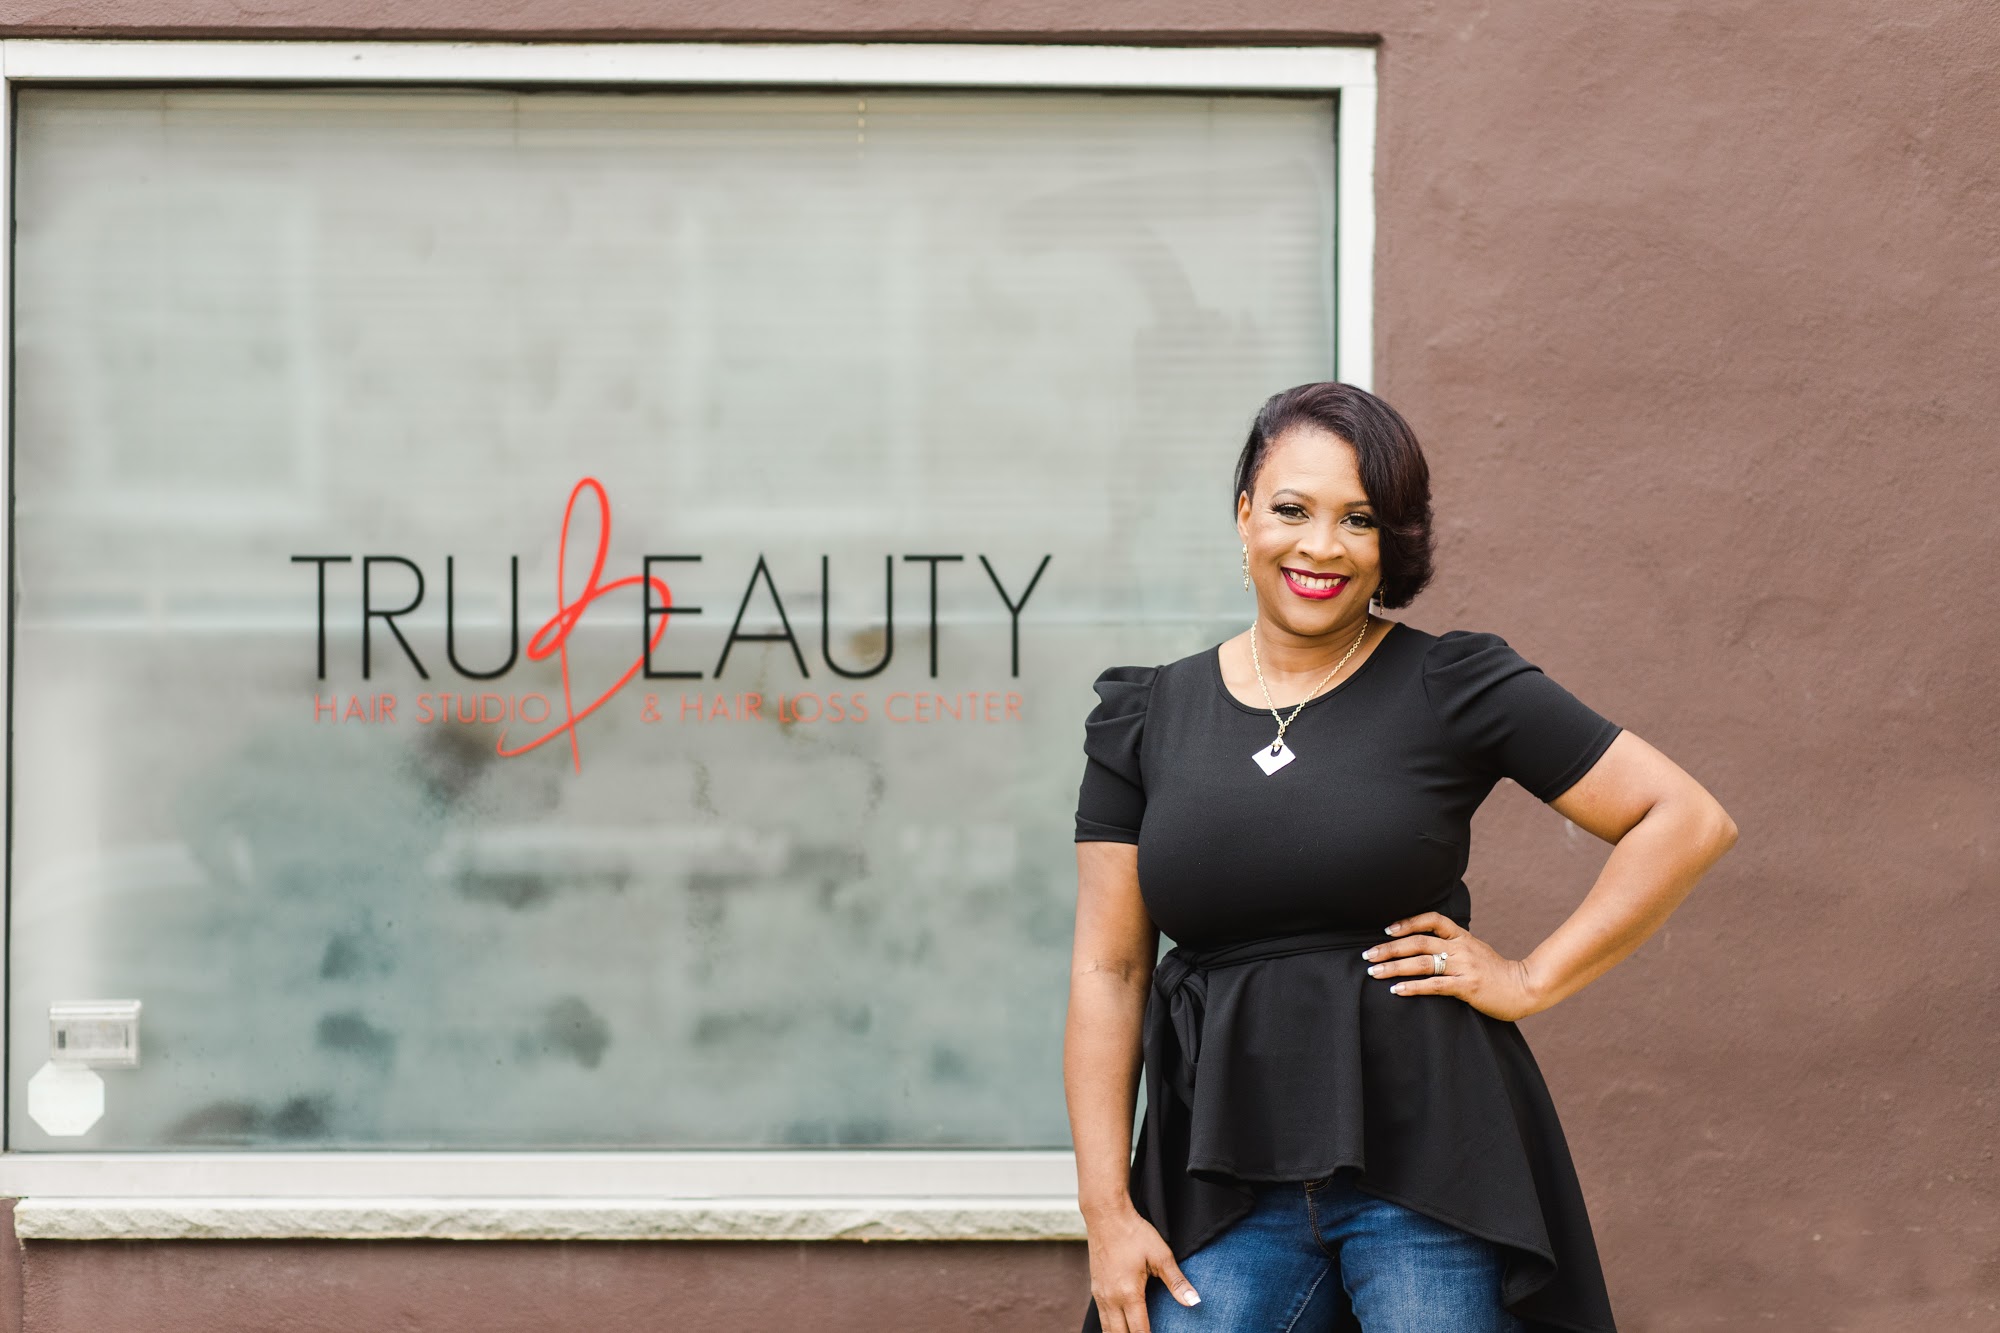 TruBeauty Hair Studio & Hair Loss Center